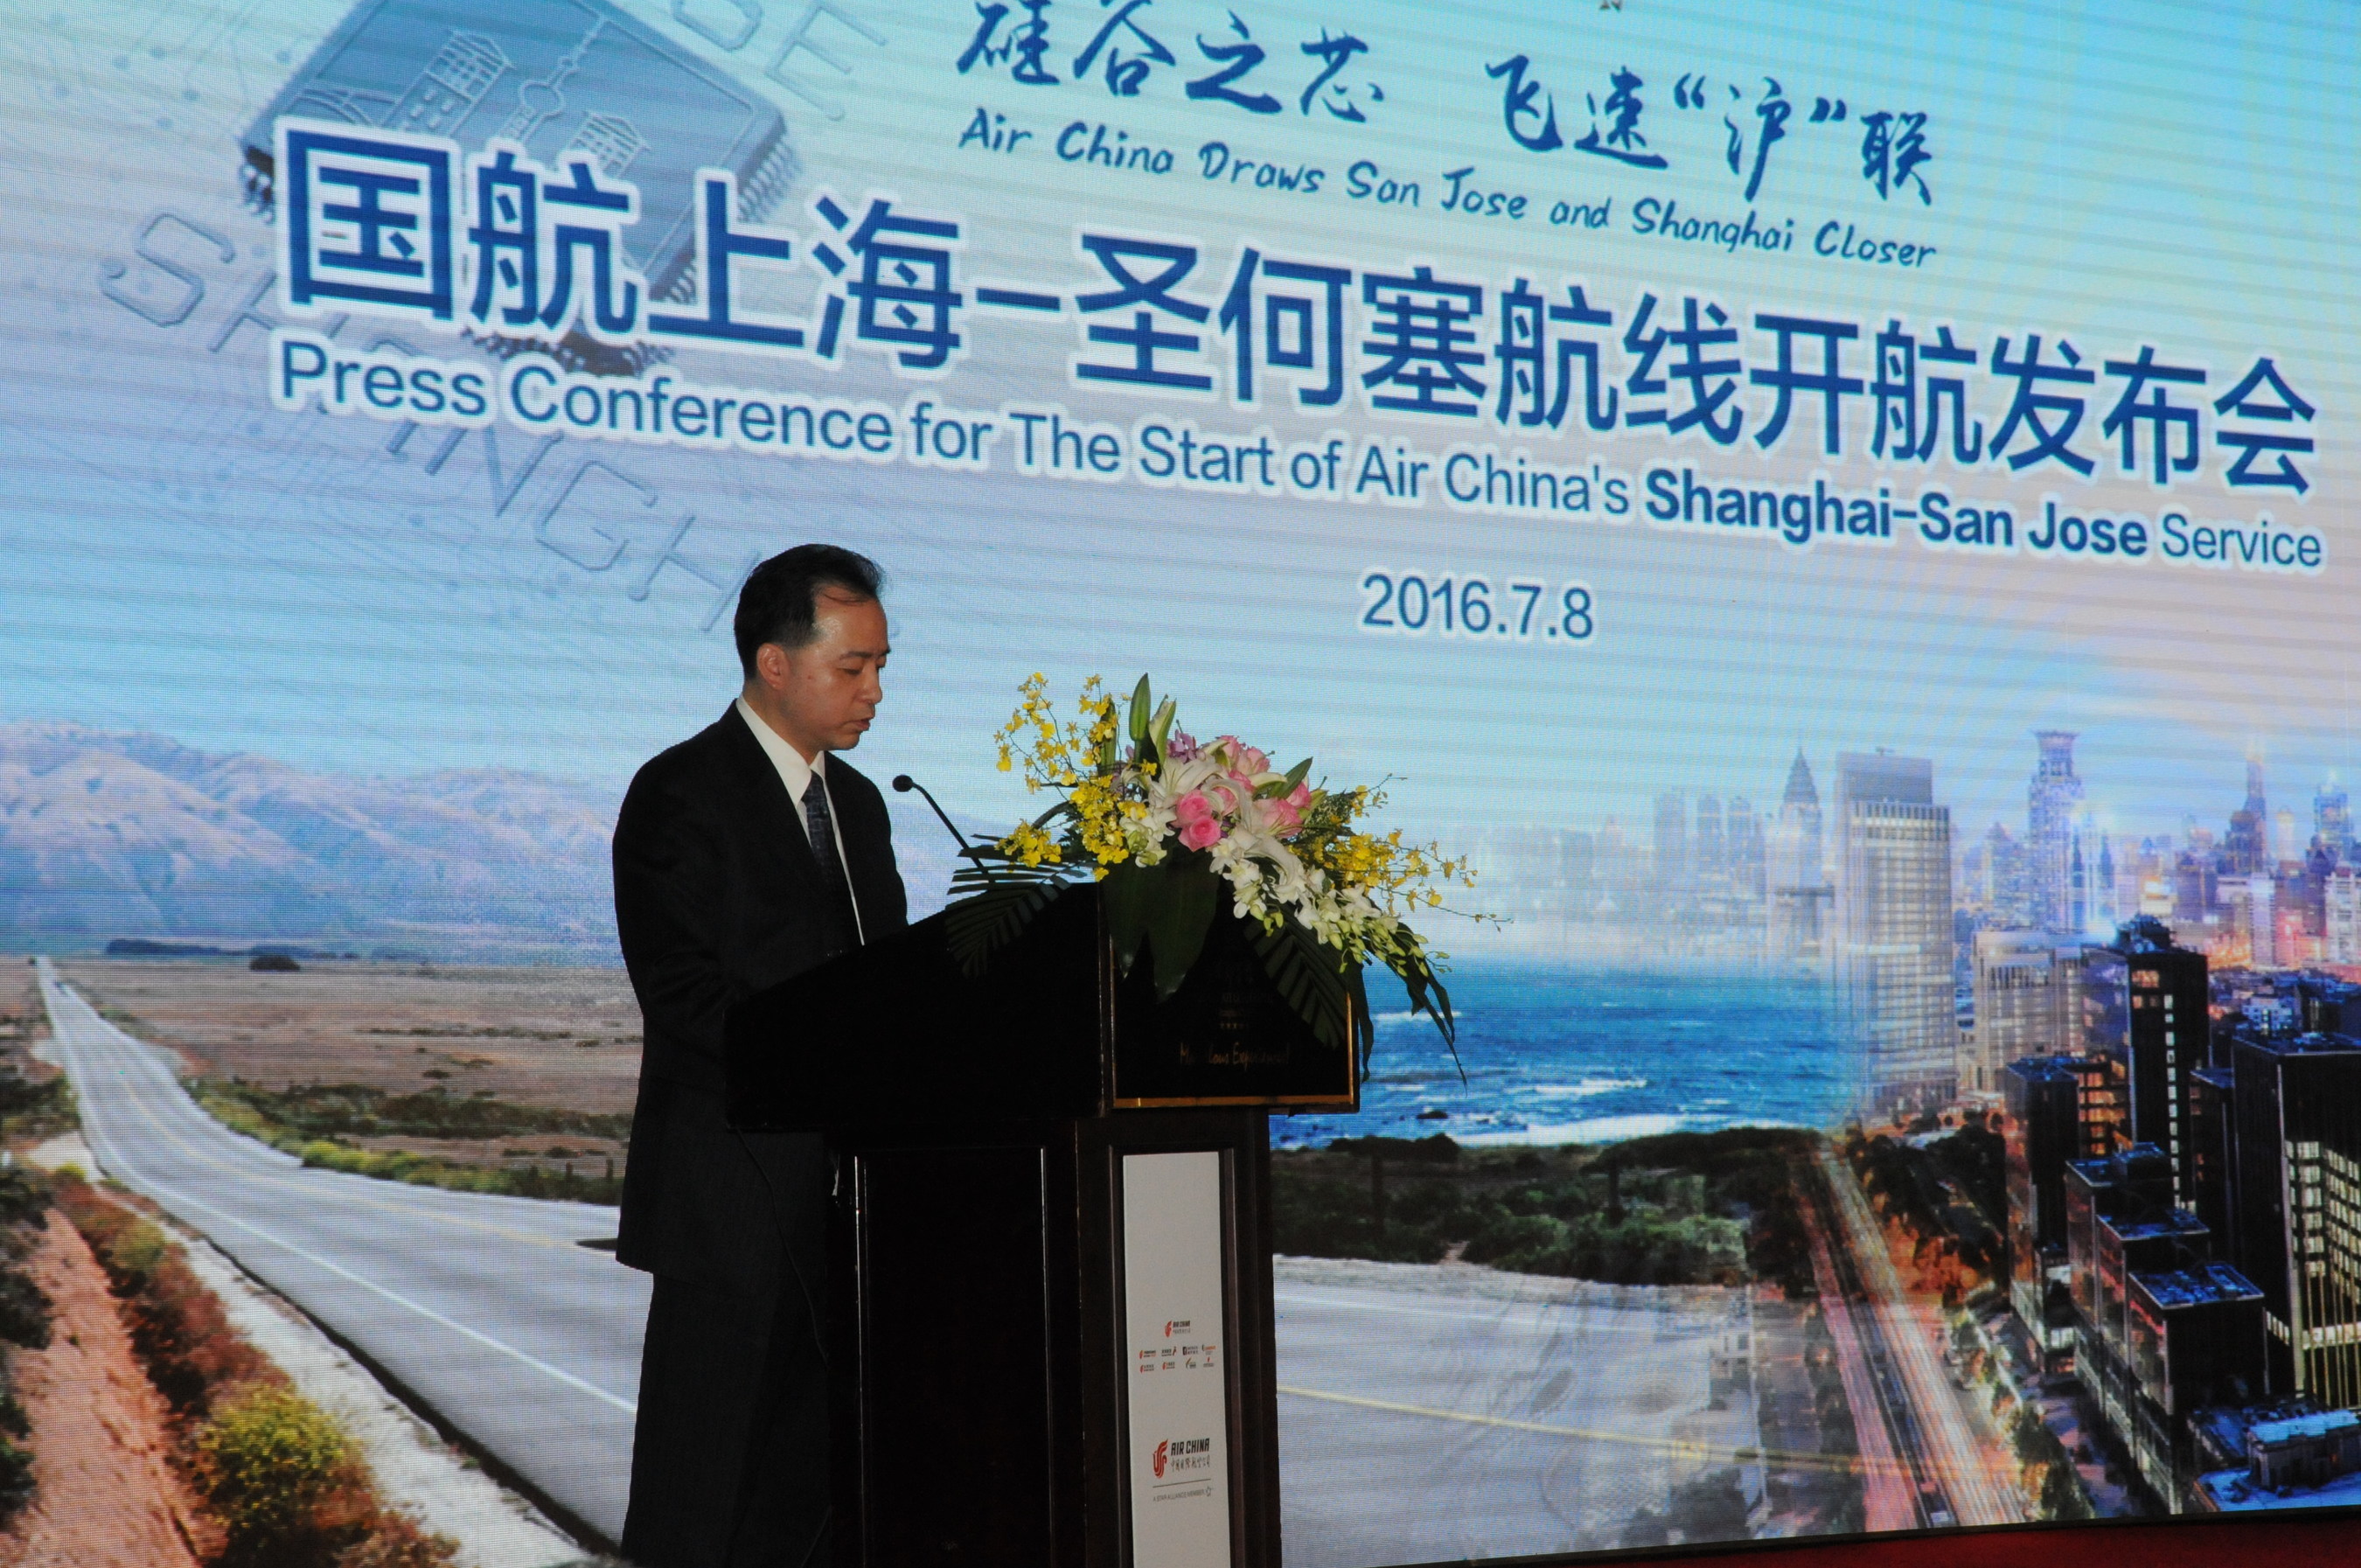 Air China Draws San Jose and Shanghai Closer